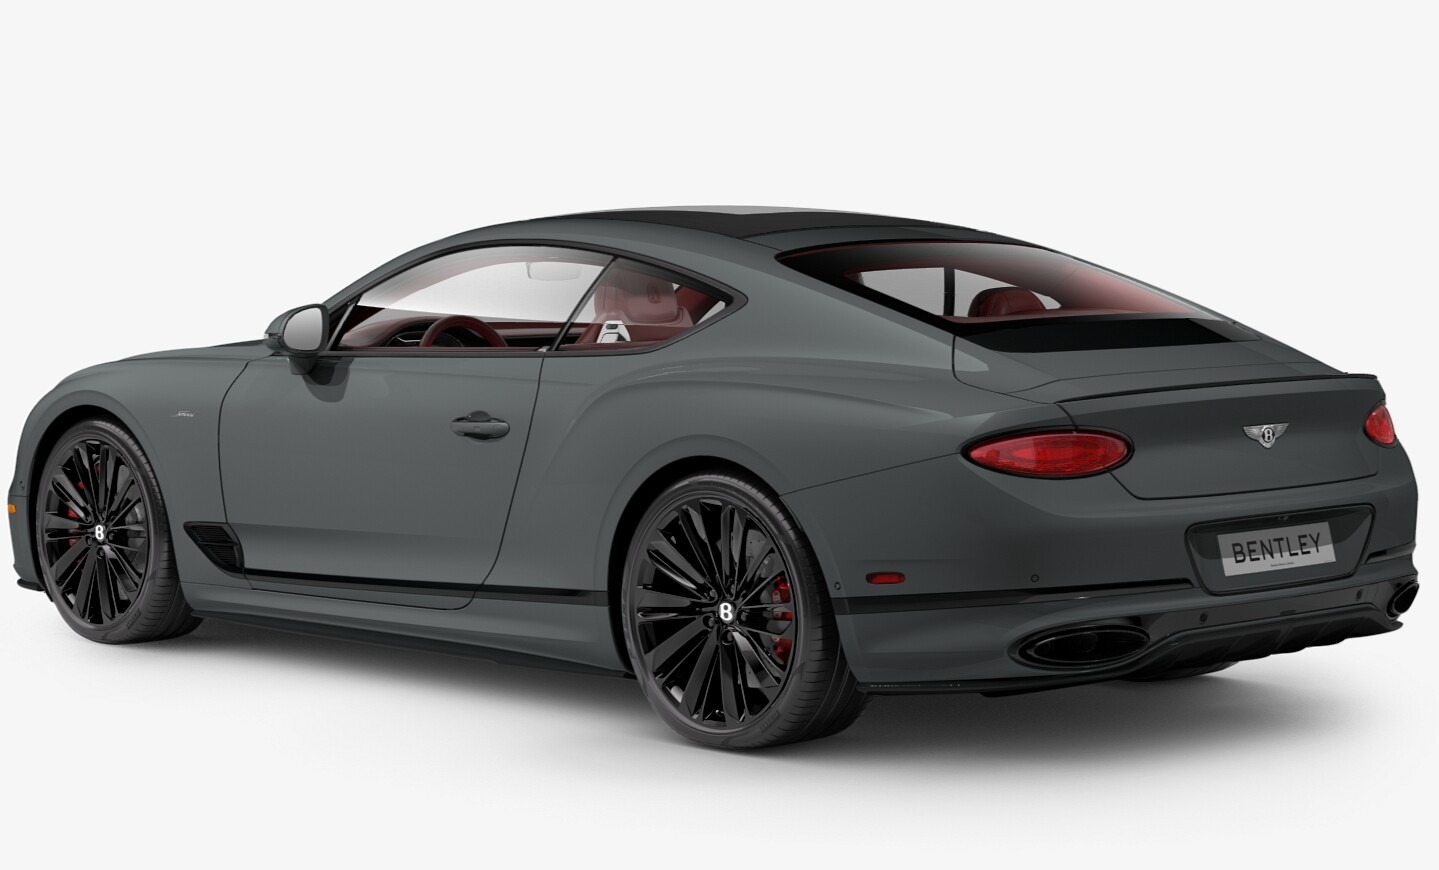 https://www.millermotorcars.com/imagetag/5060/3/l/New-2022-Bentley-Continental-GT-Speed.jpg